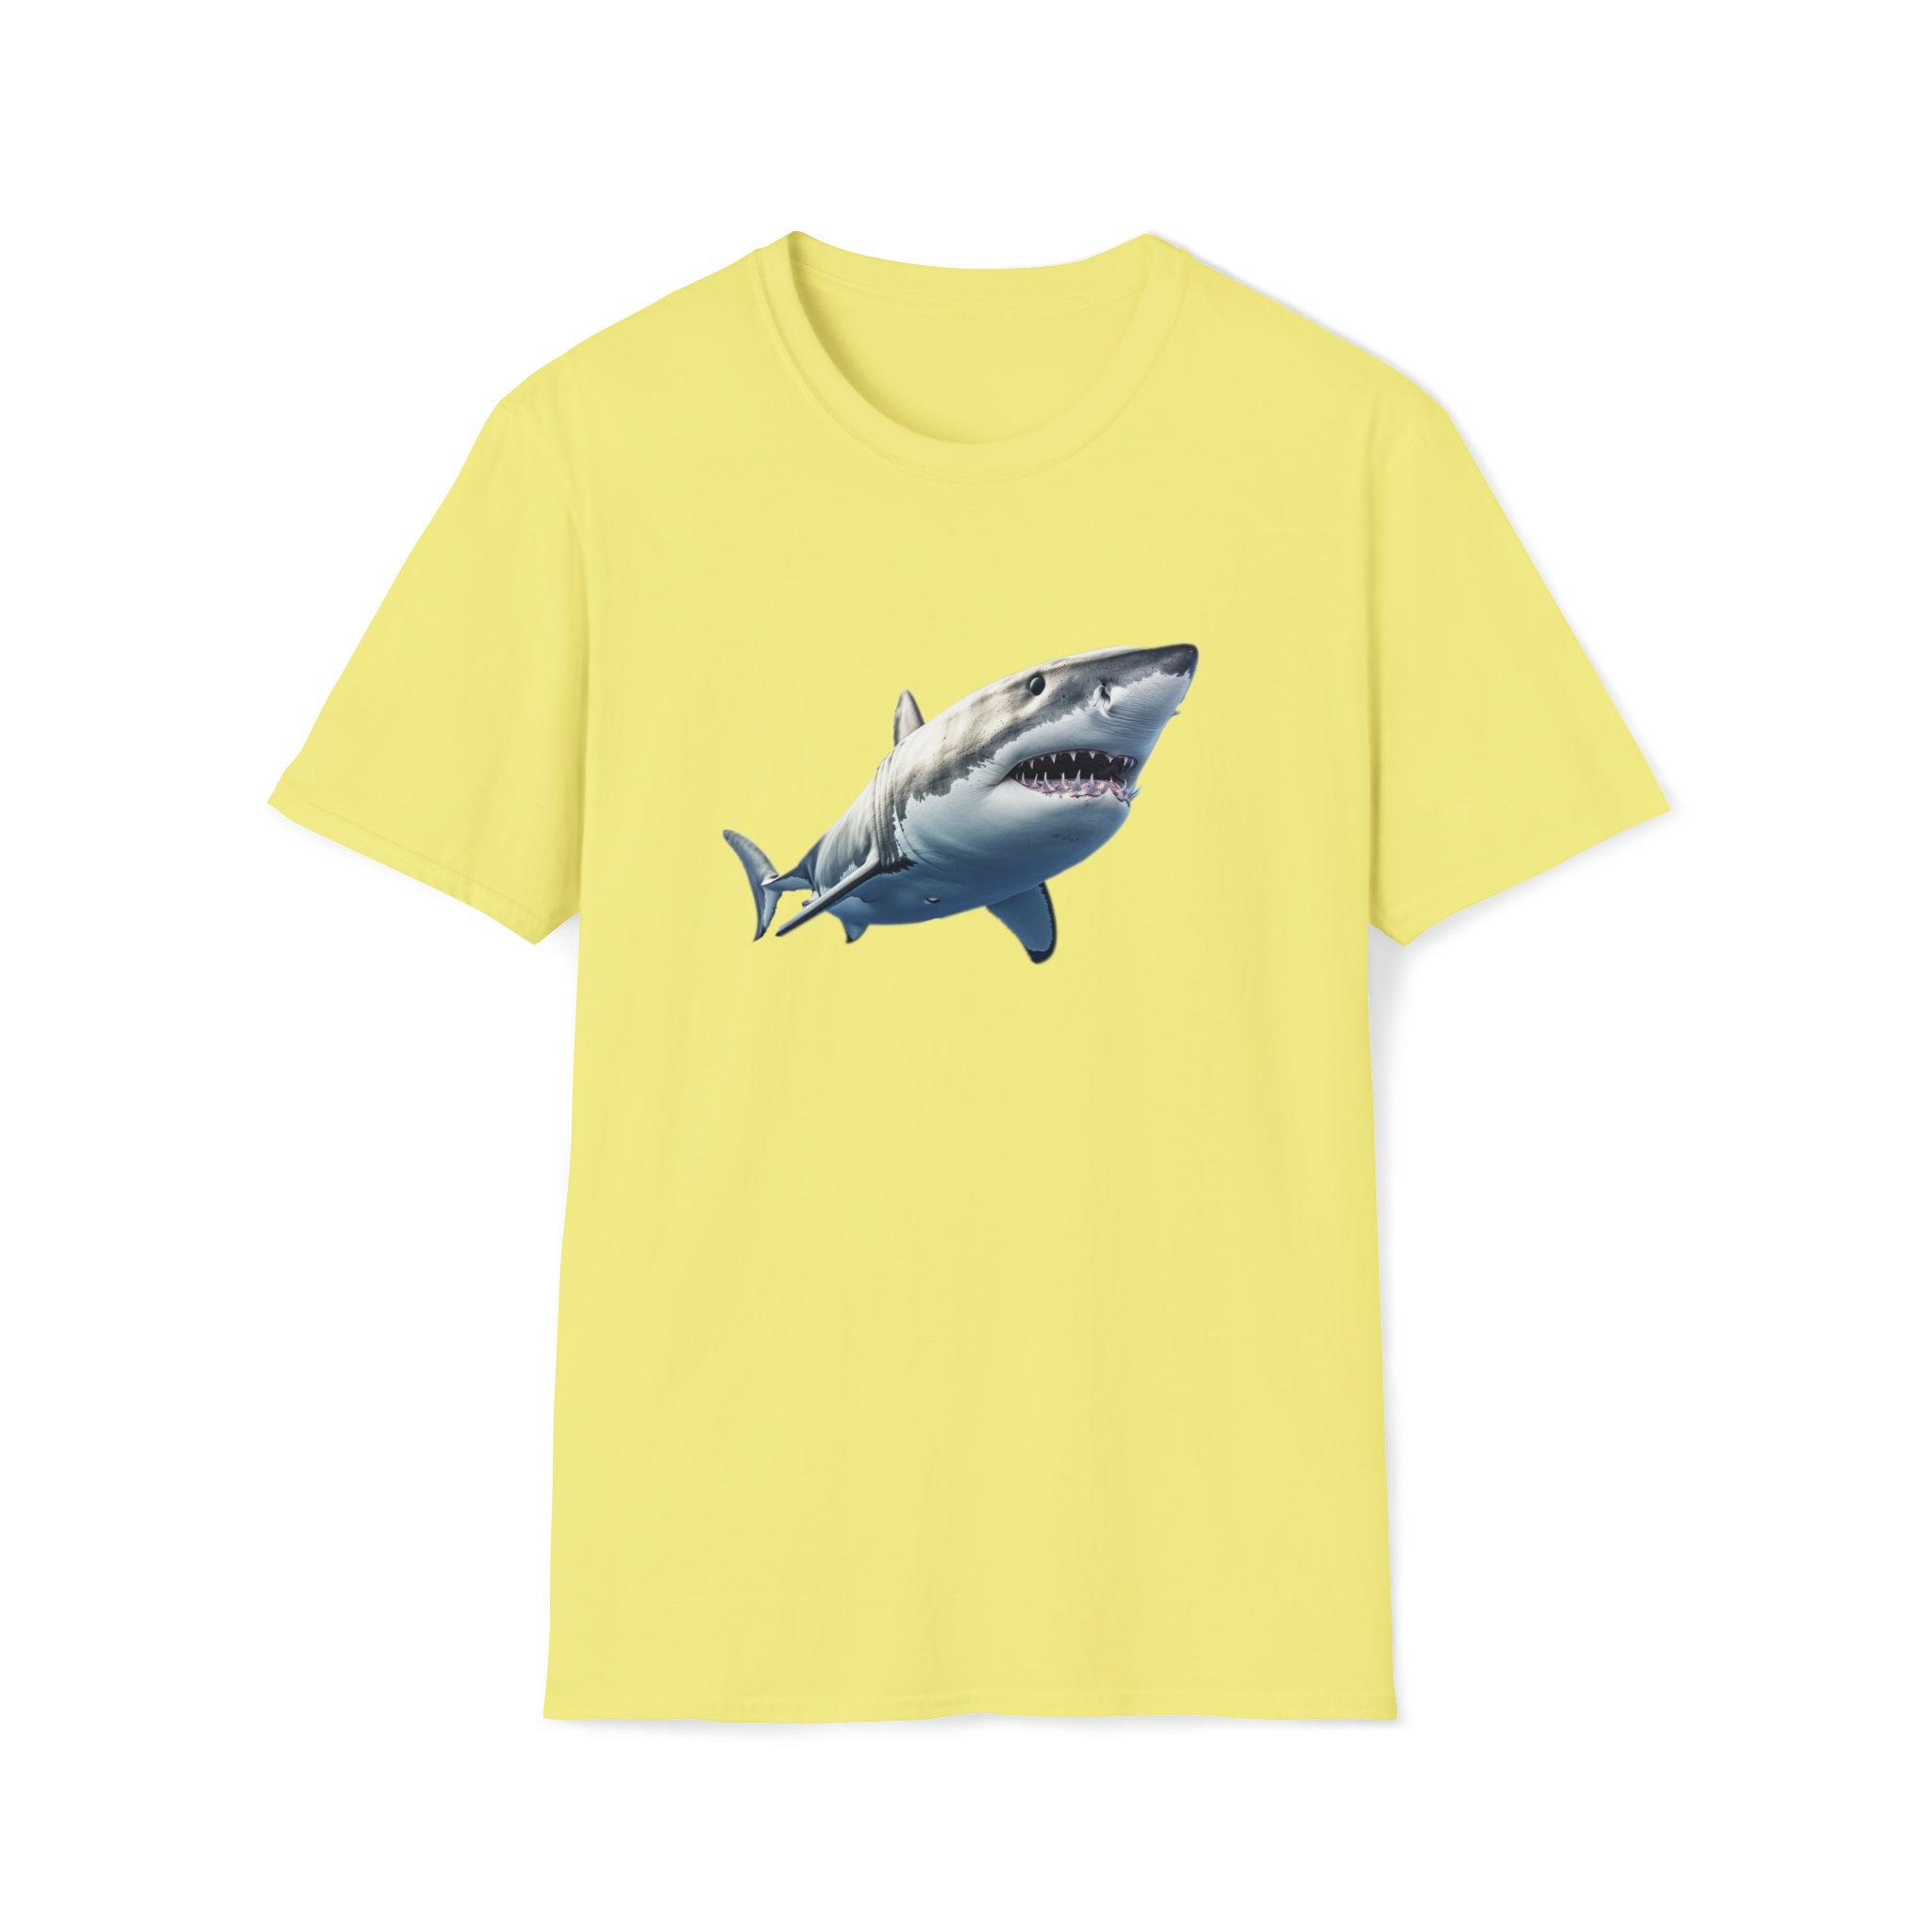 Great White Shark T-shirt - Etsy